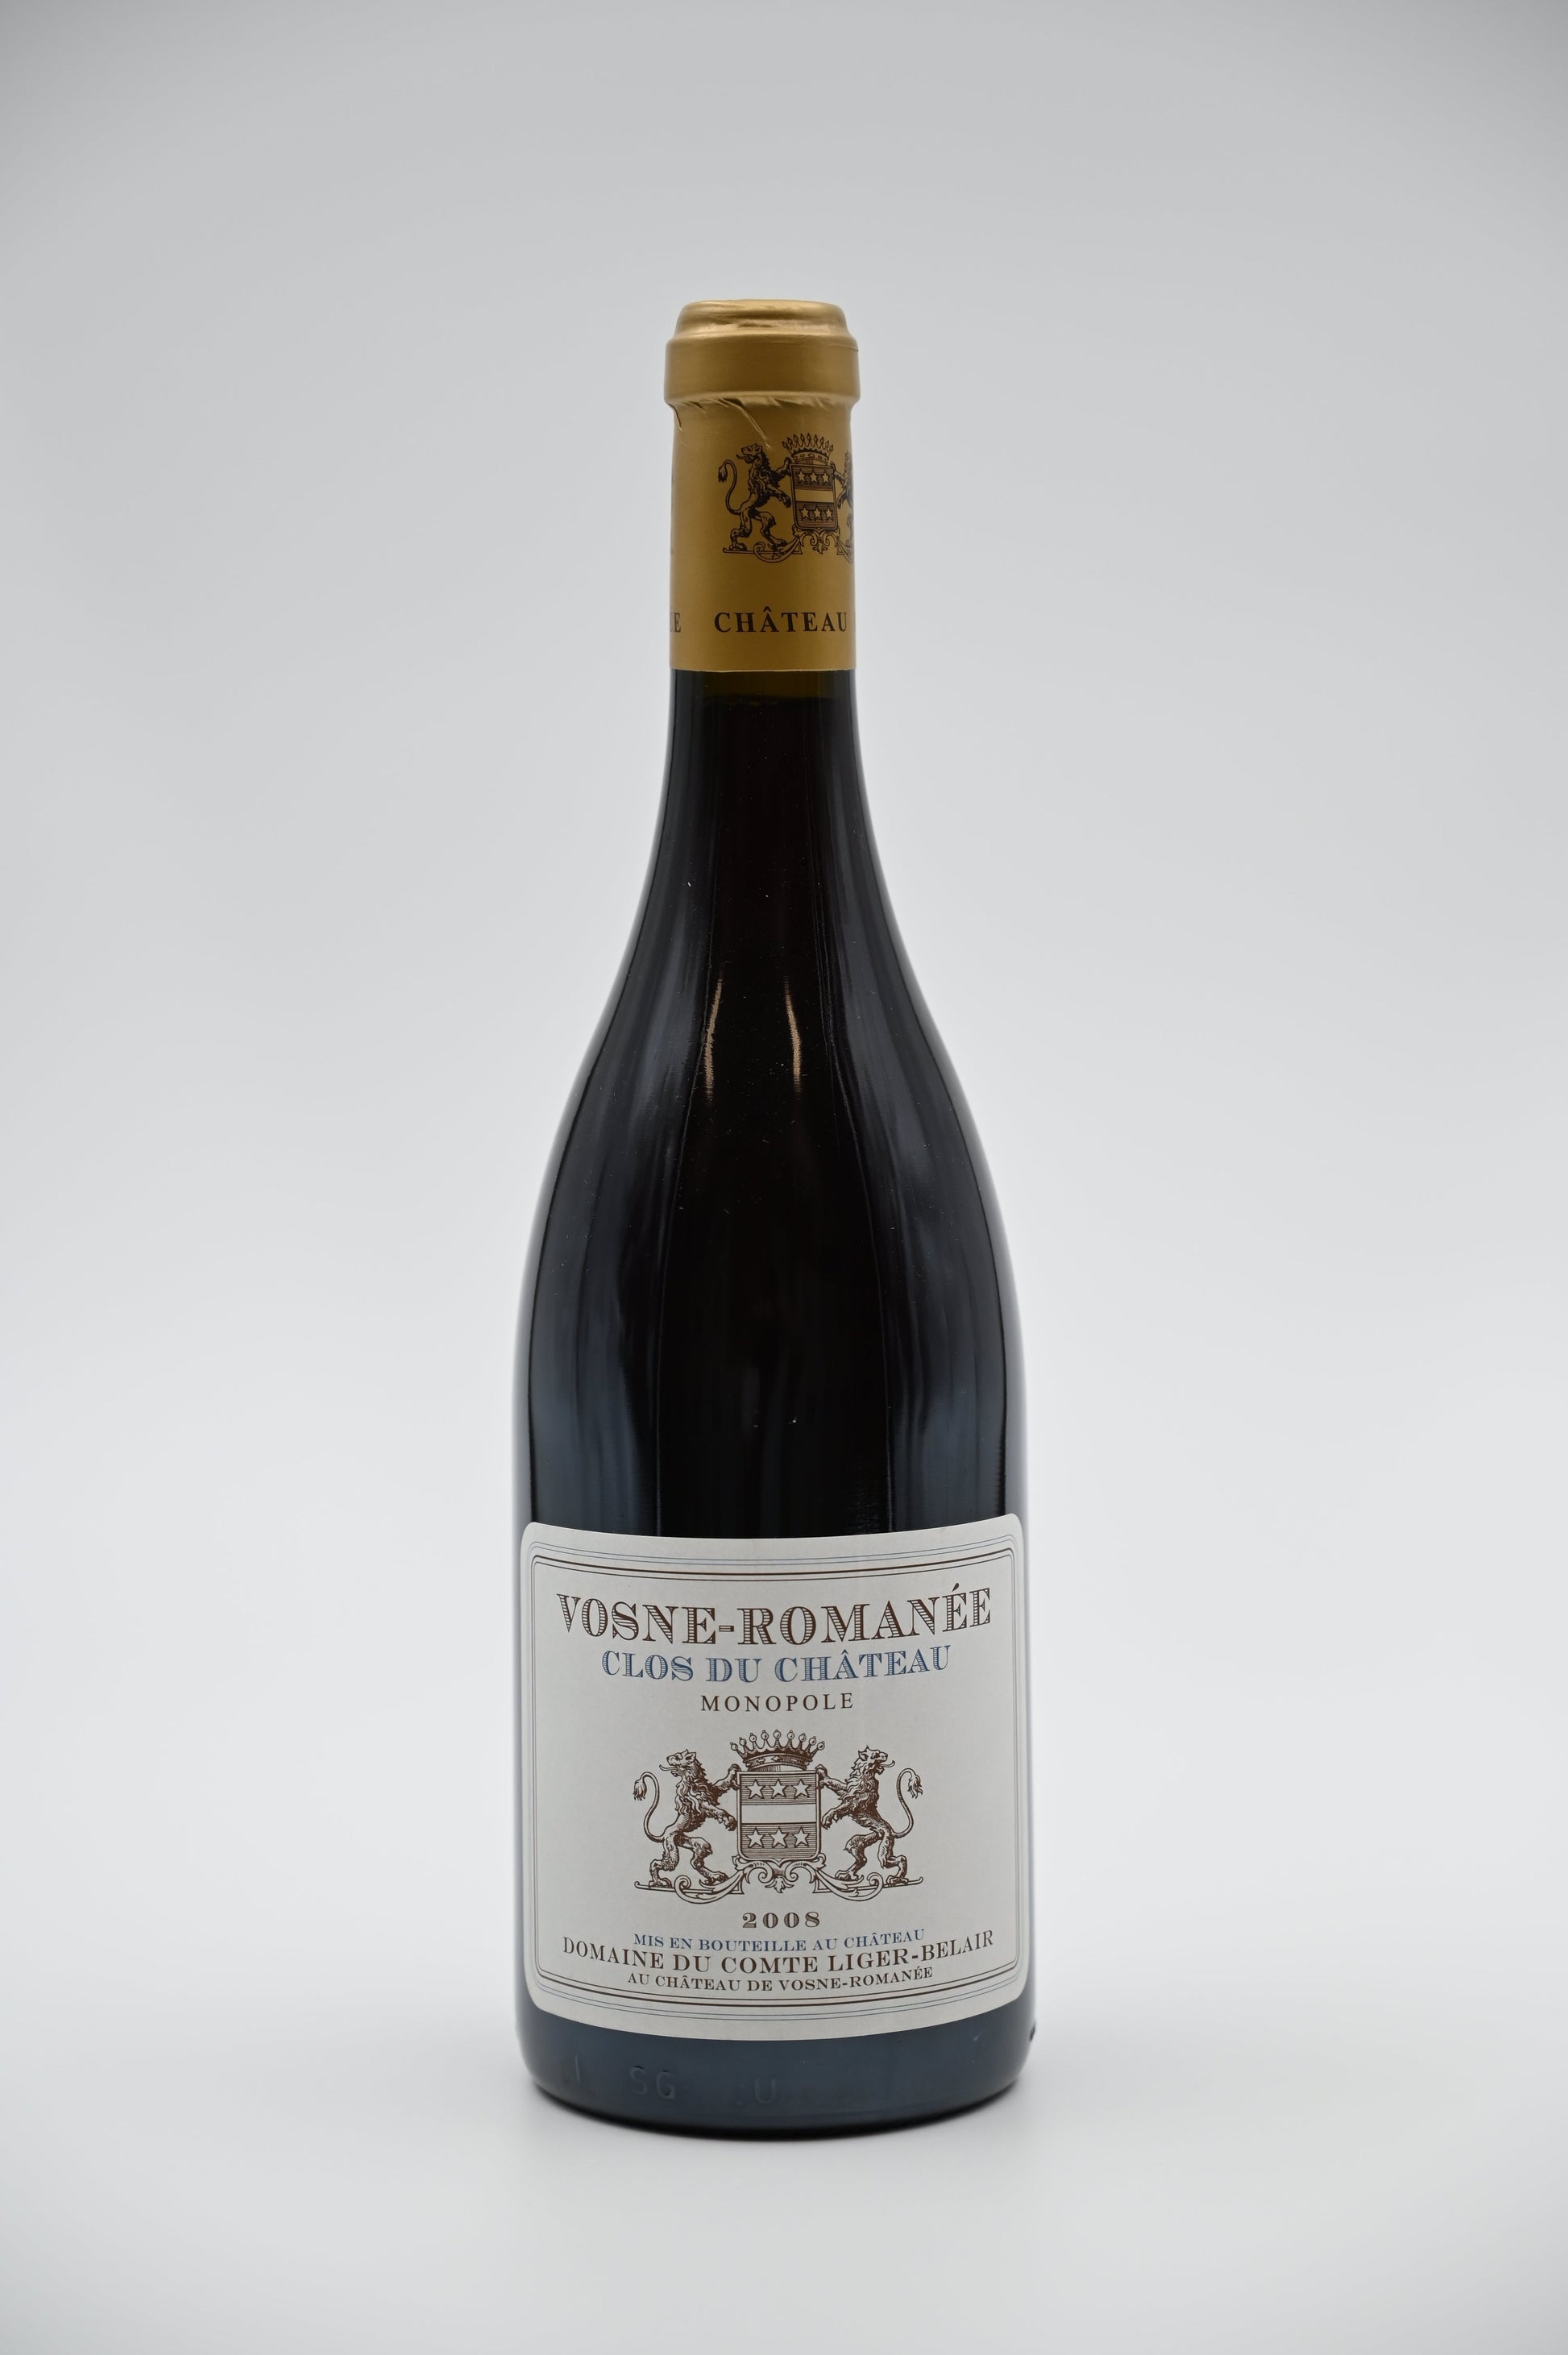 Comte Liger Belair, Vosne Romanee Clos du Chateau 里贝伯爵酒庄城堡园 沃恩罗曼尼村 红葡萄酒 李白